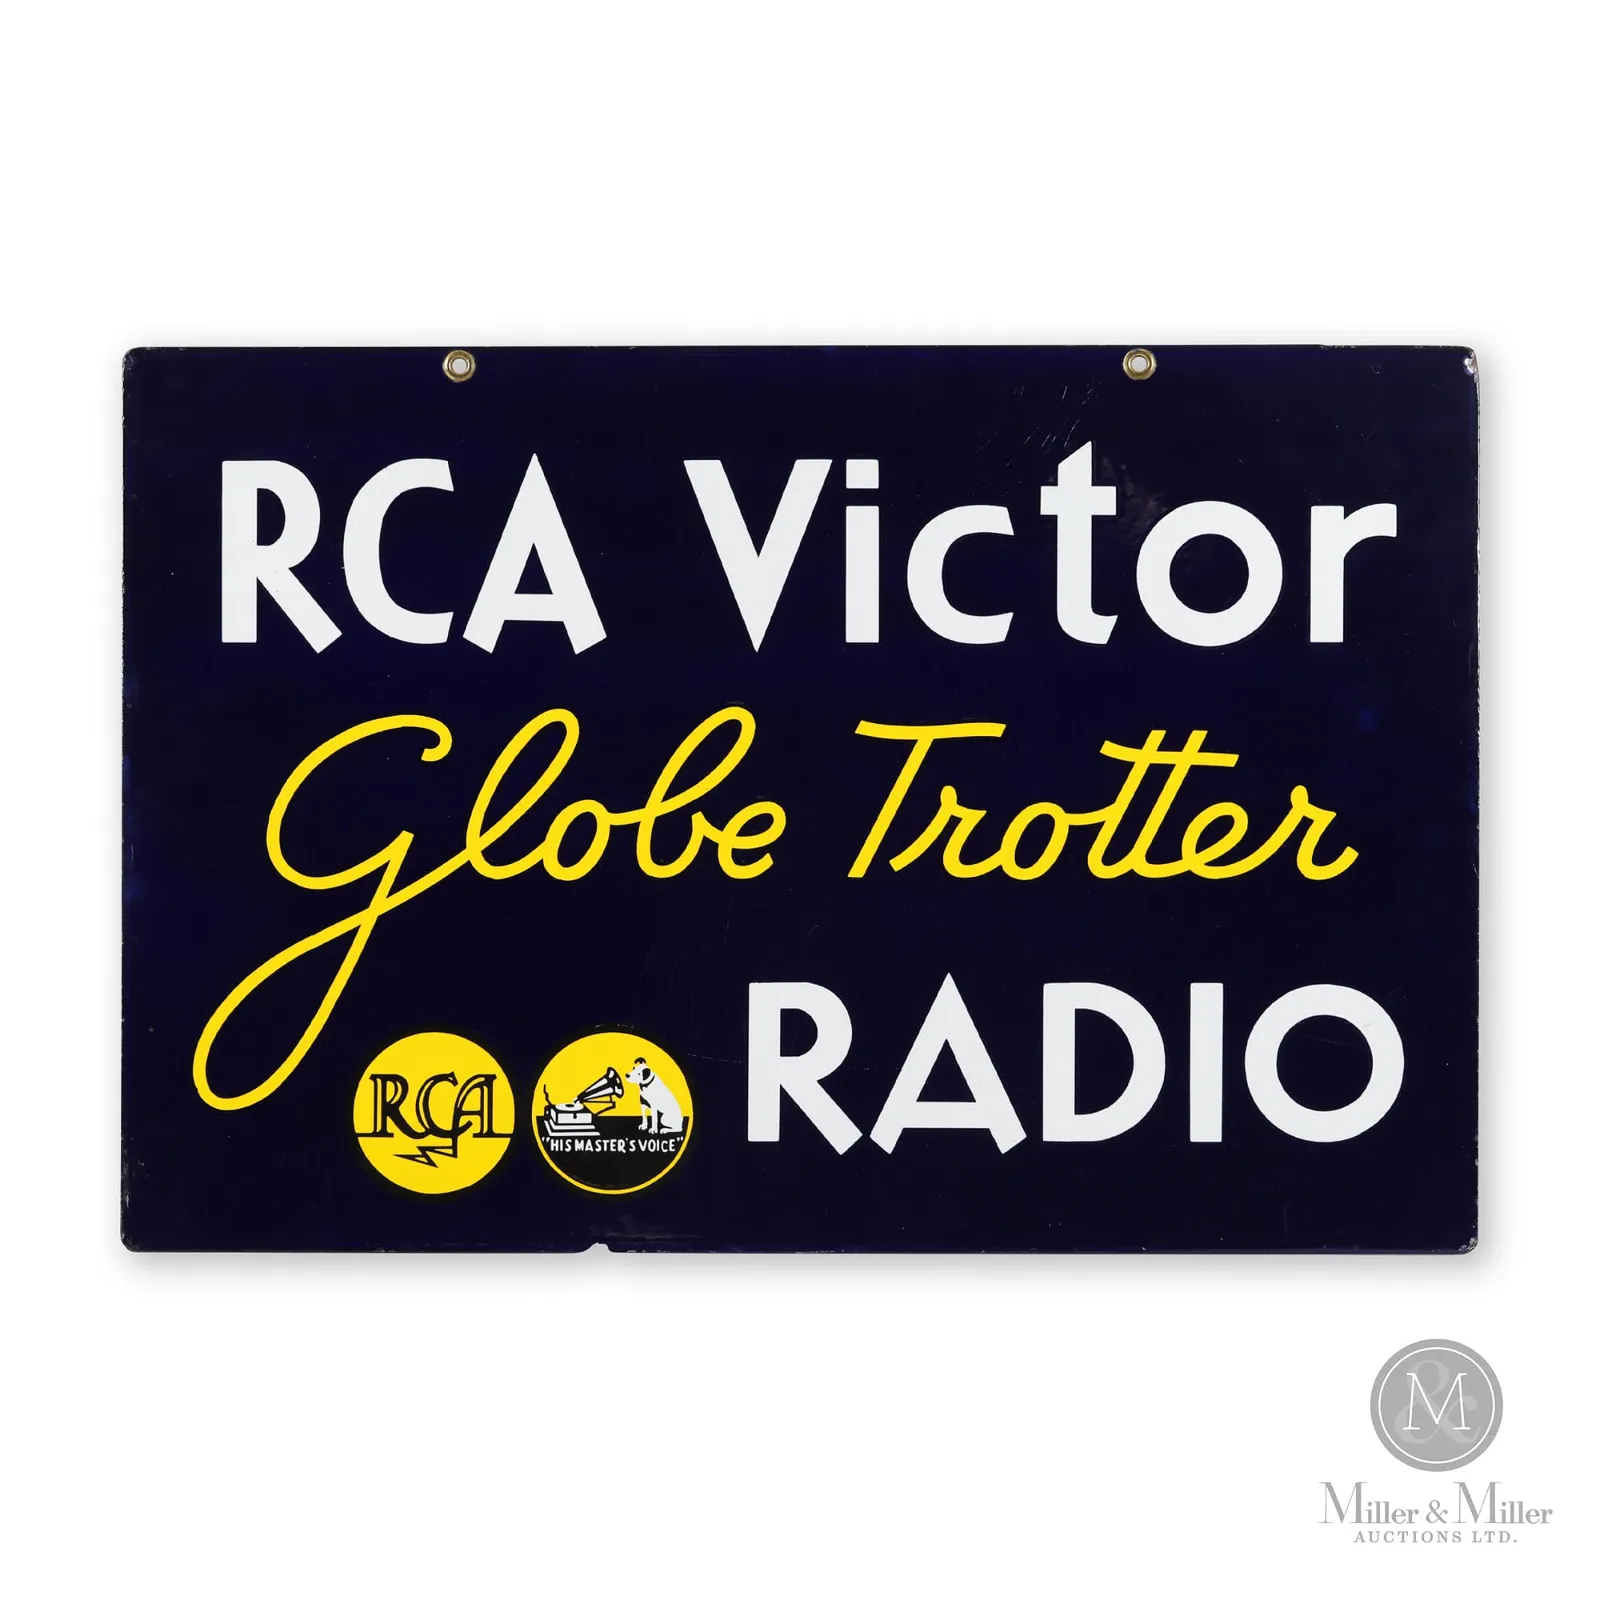 Canadian 1940s double-sided porcelain RCA Victor Globetrotter radio sign, estimated at CA$3,000-$5,000 ($2,220-$3,700) at Miller & Miller.